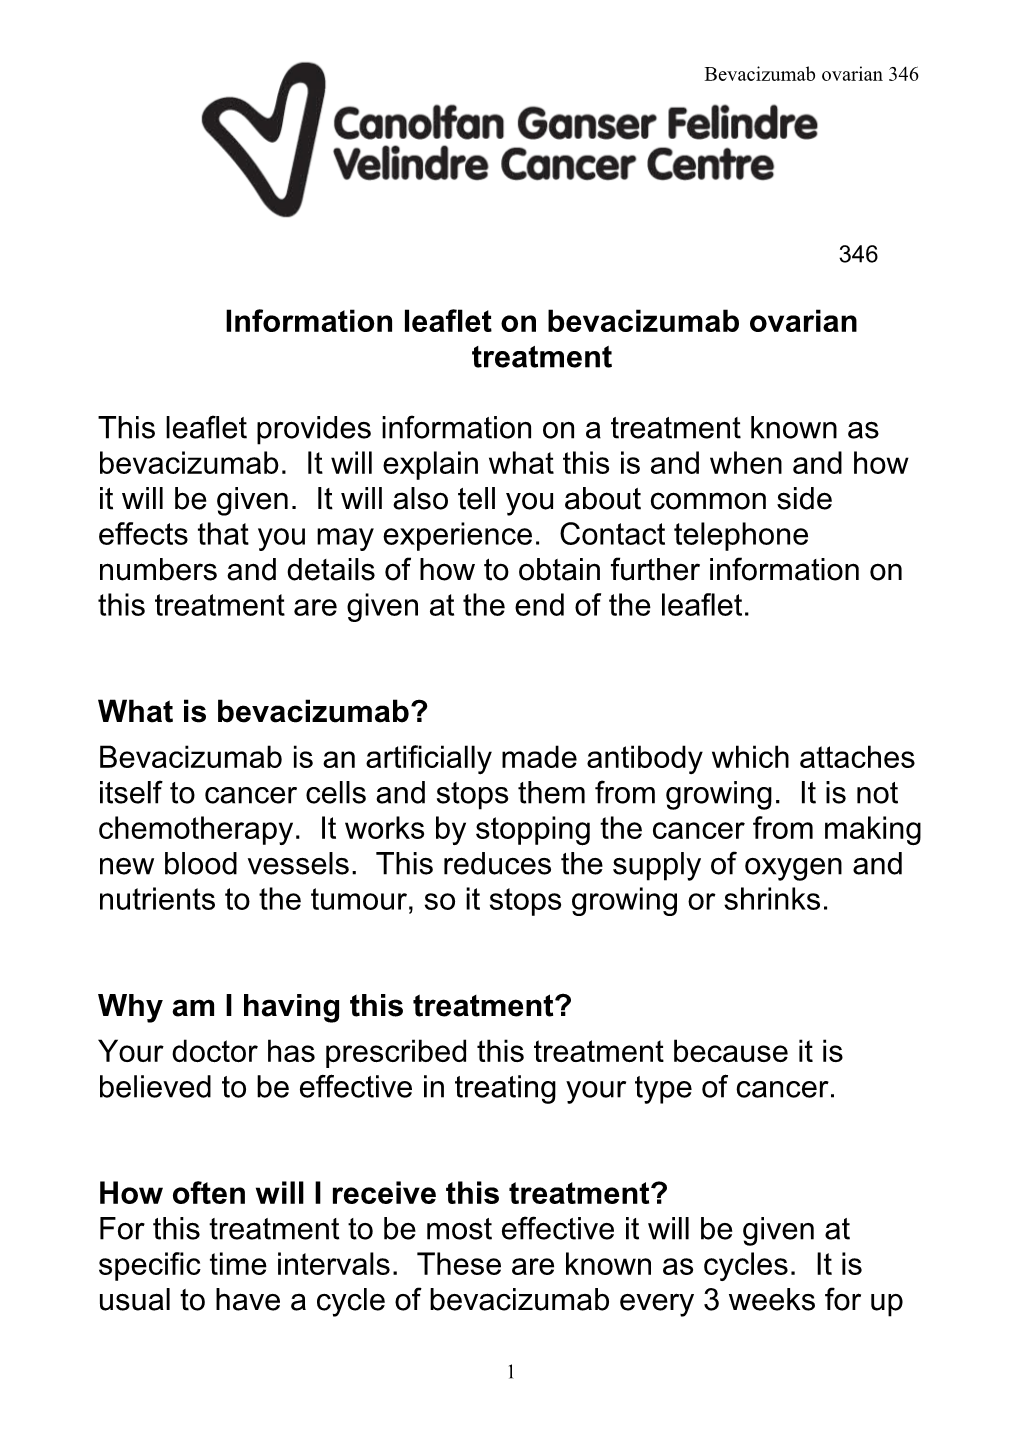 Information Leaflet on Bevacizumabovariantreatment